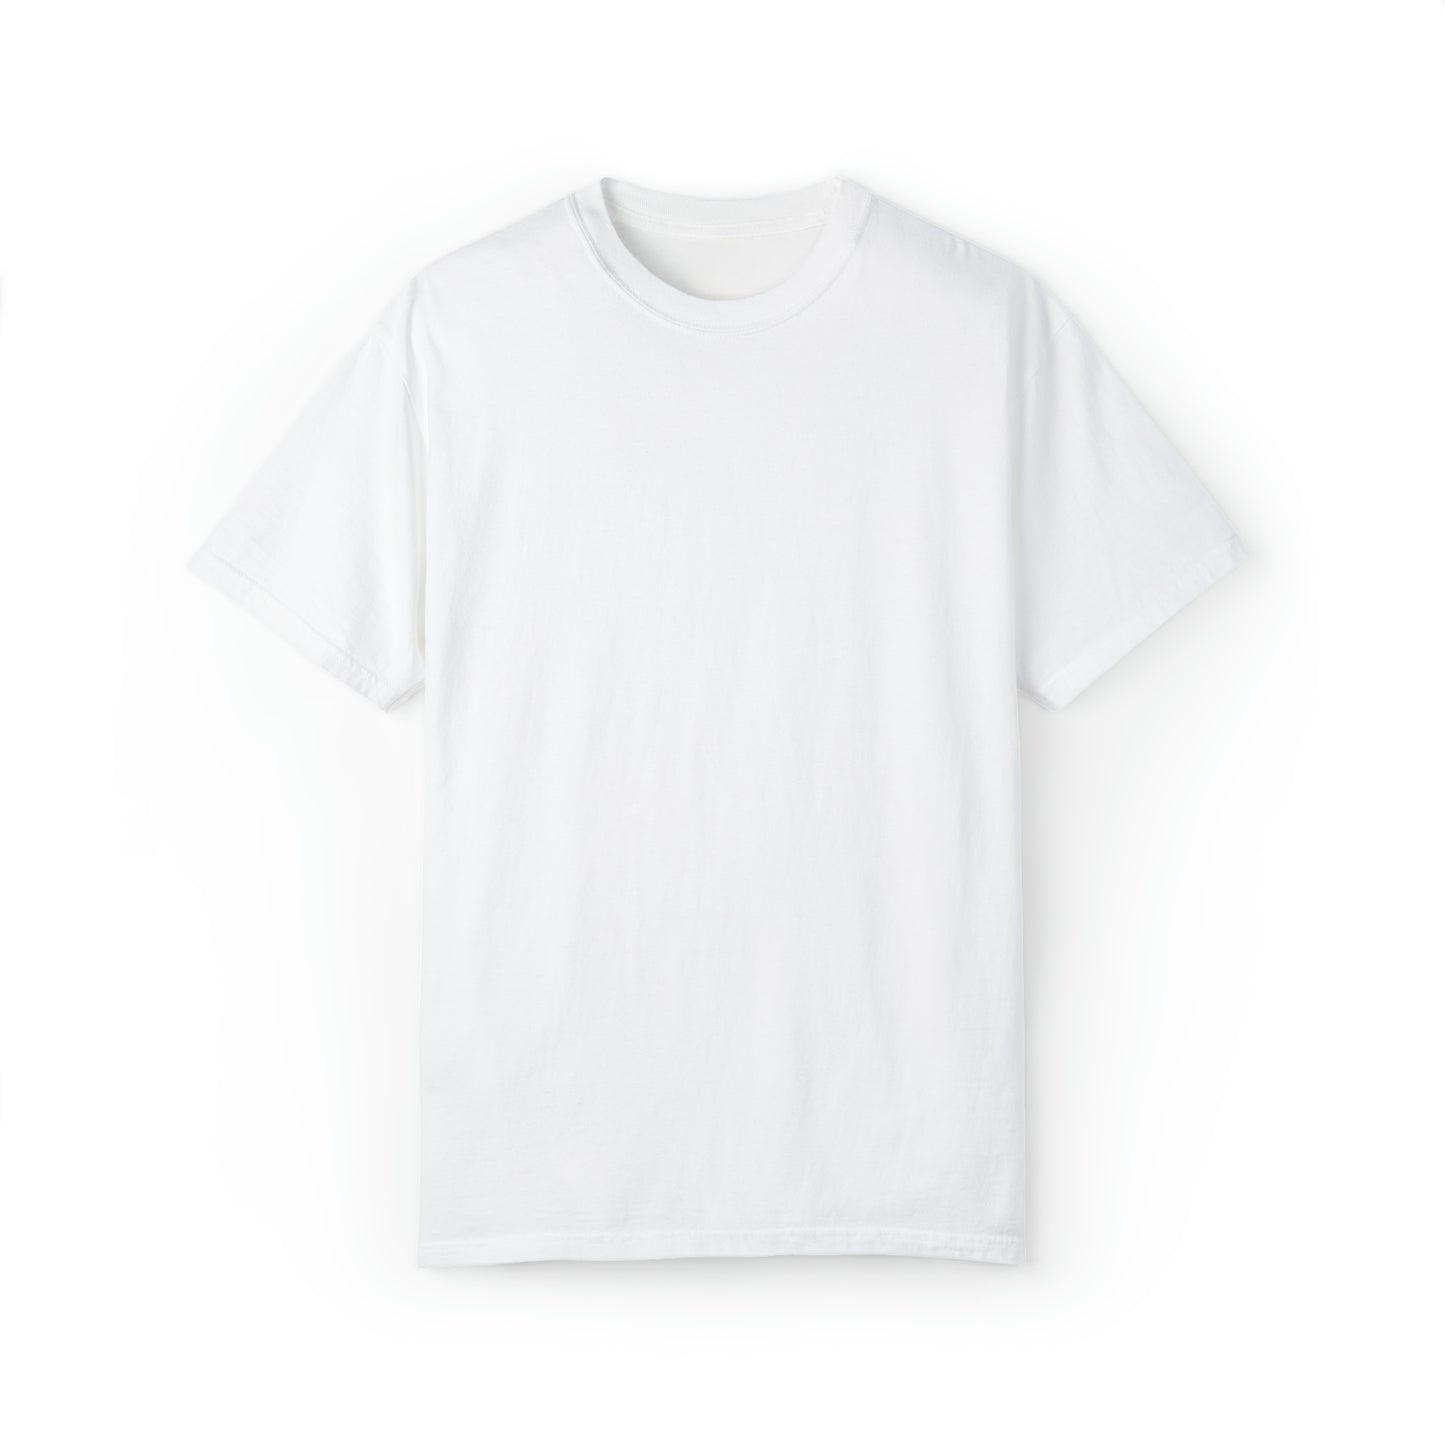 Unisex Comfort Colors T-shirt | The Blind Pig Glasses